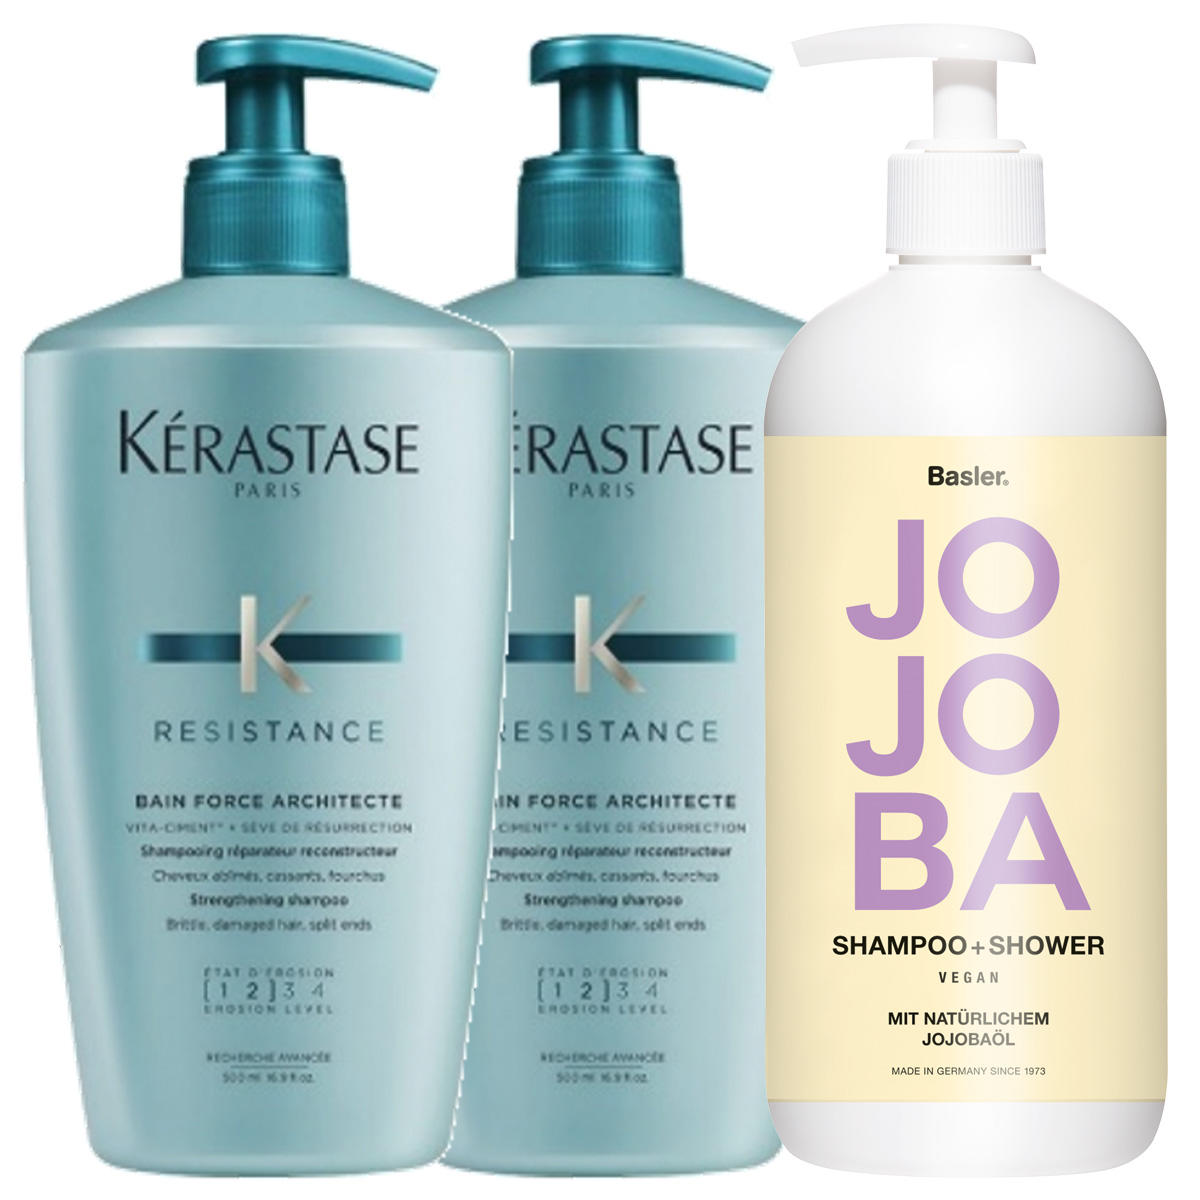 Kérastase Resistance Bain Force Architecte Bundle 2 x 500 ml + Basler Jojoba Shampoo & Shower 500 ml gratis - 1